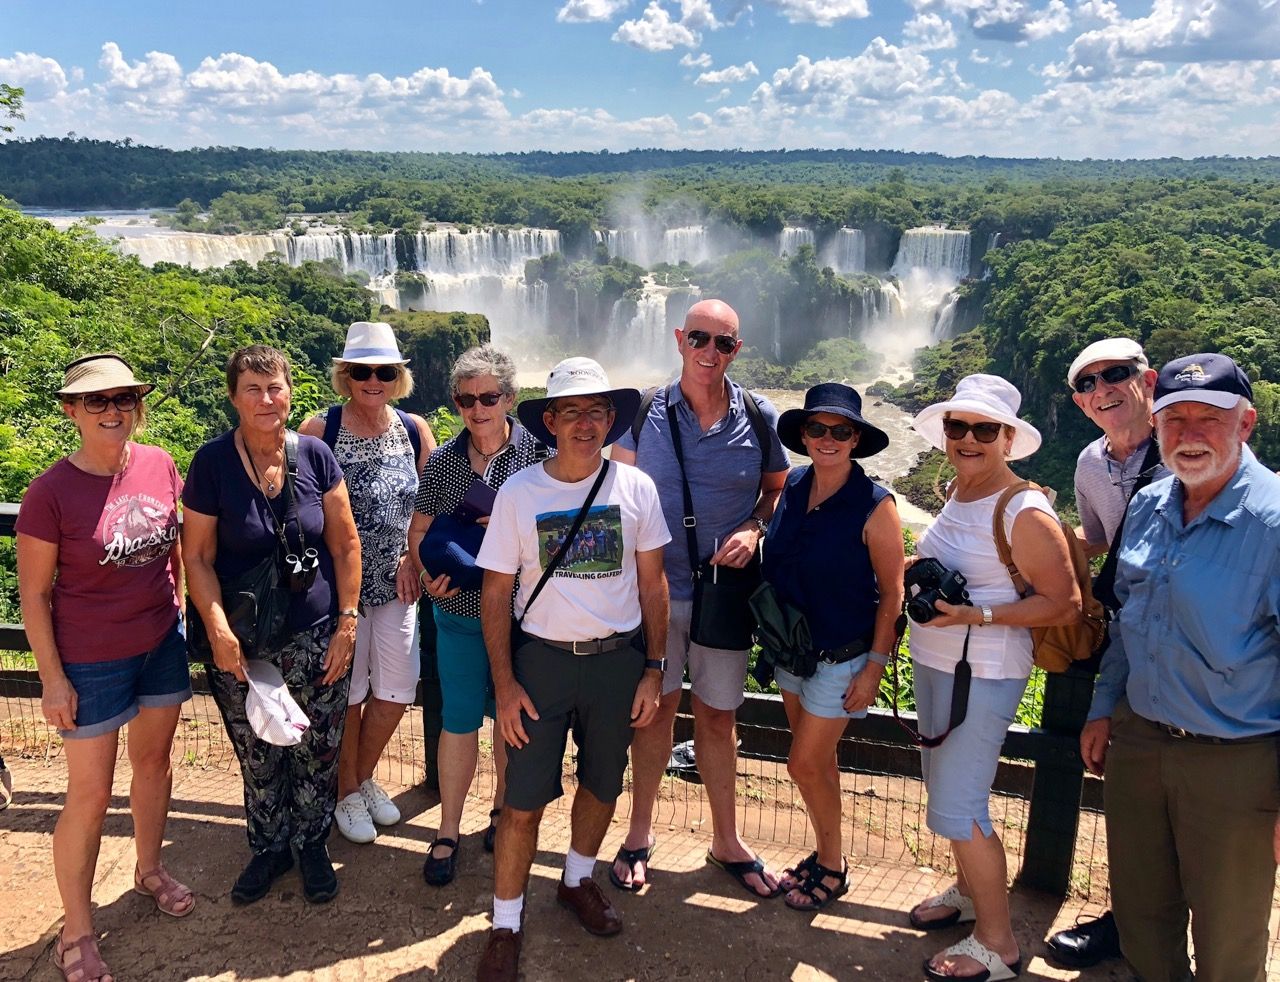 Group photo at Iguazu Falls